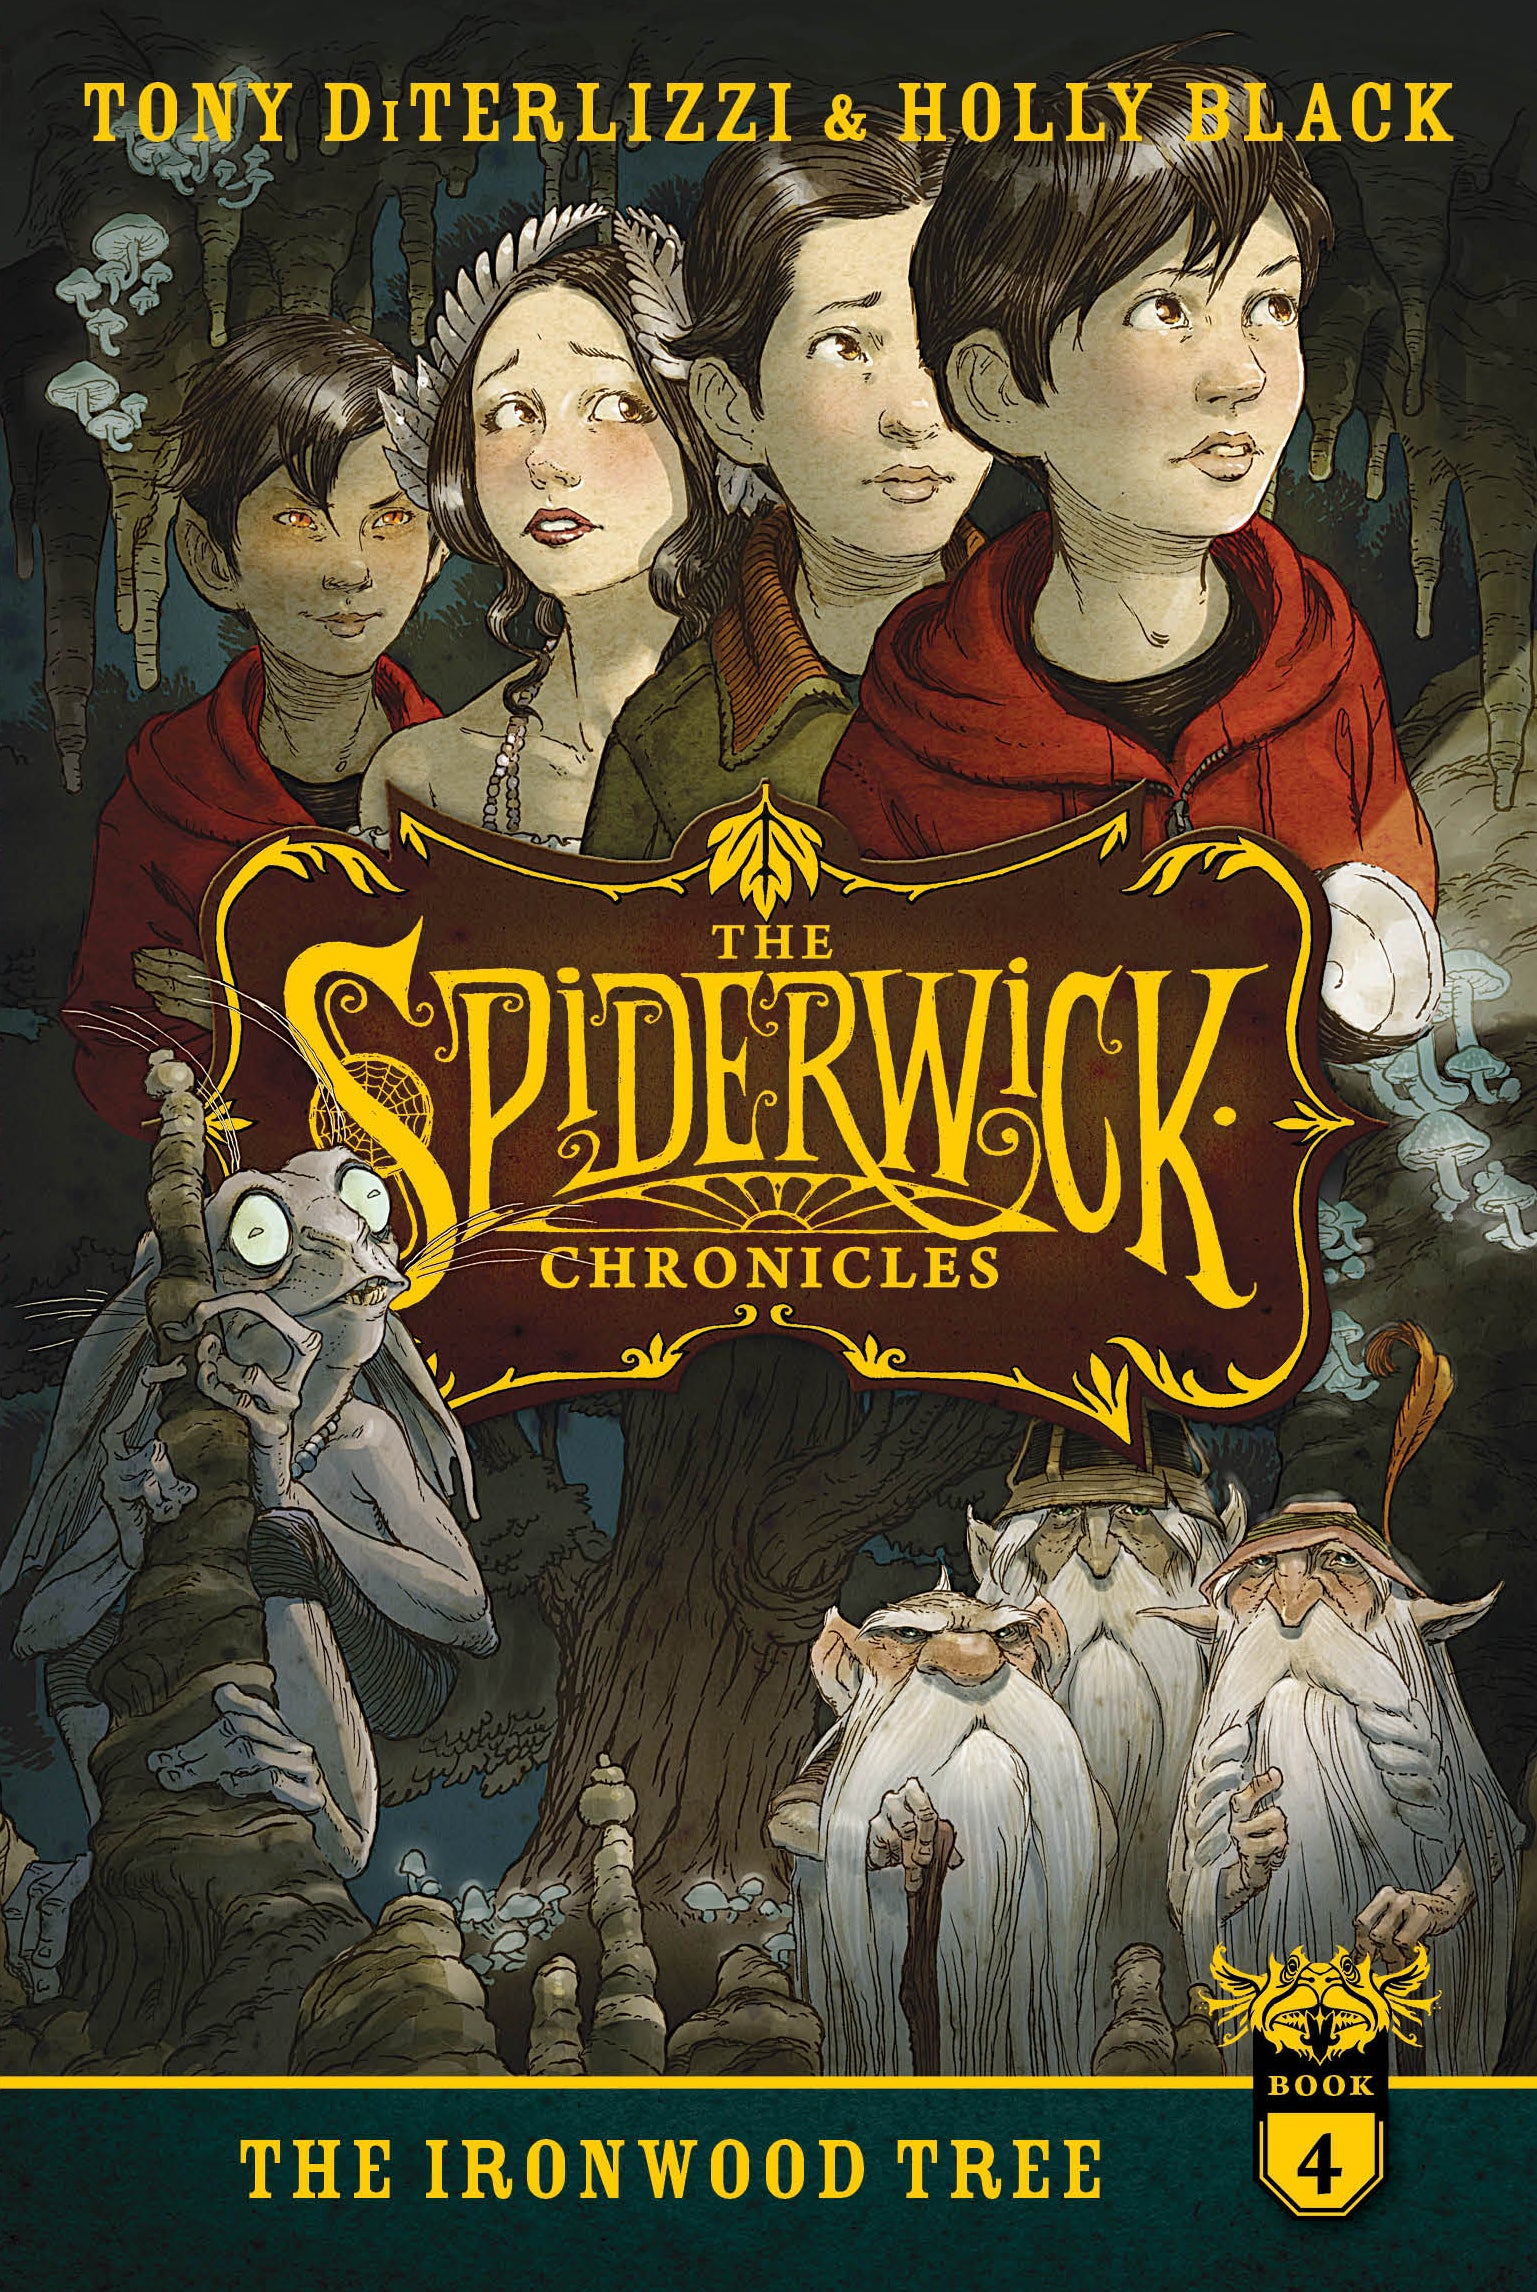 The Spiderwick Chronicles: Book 4